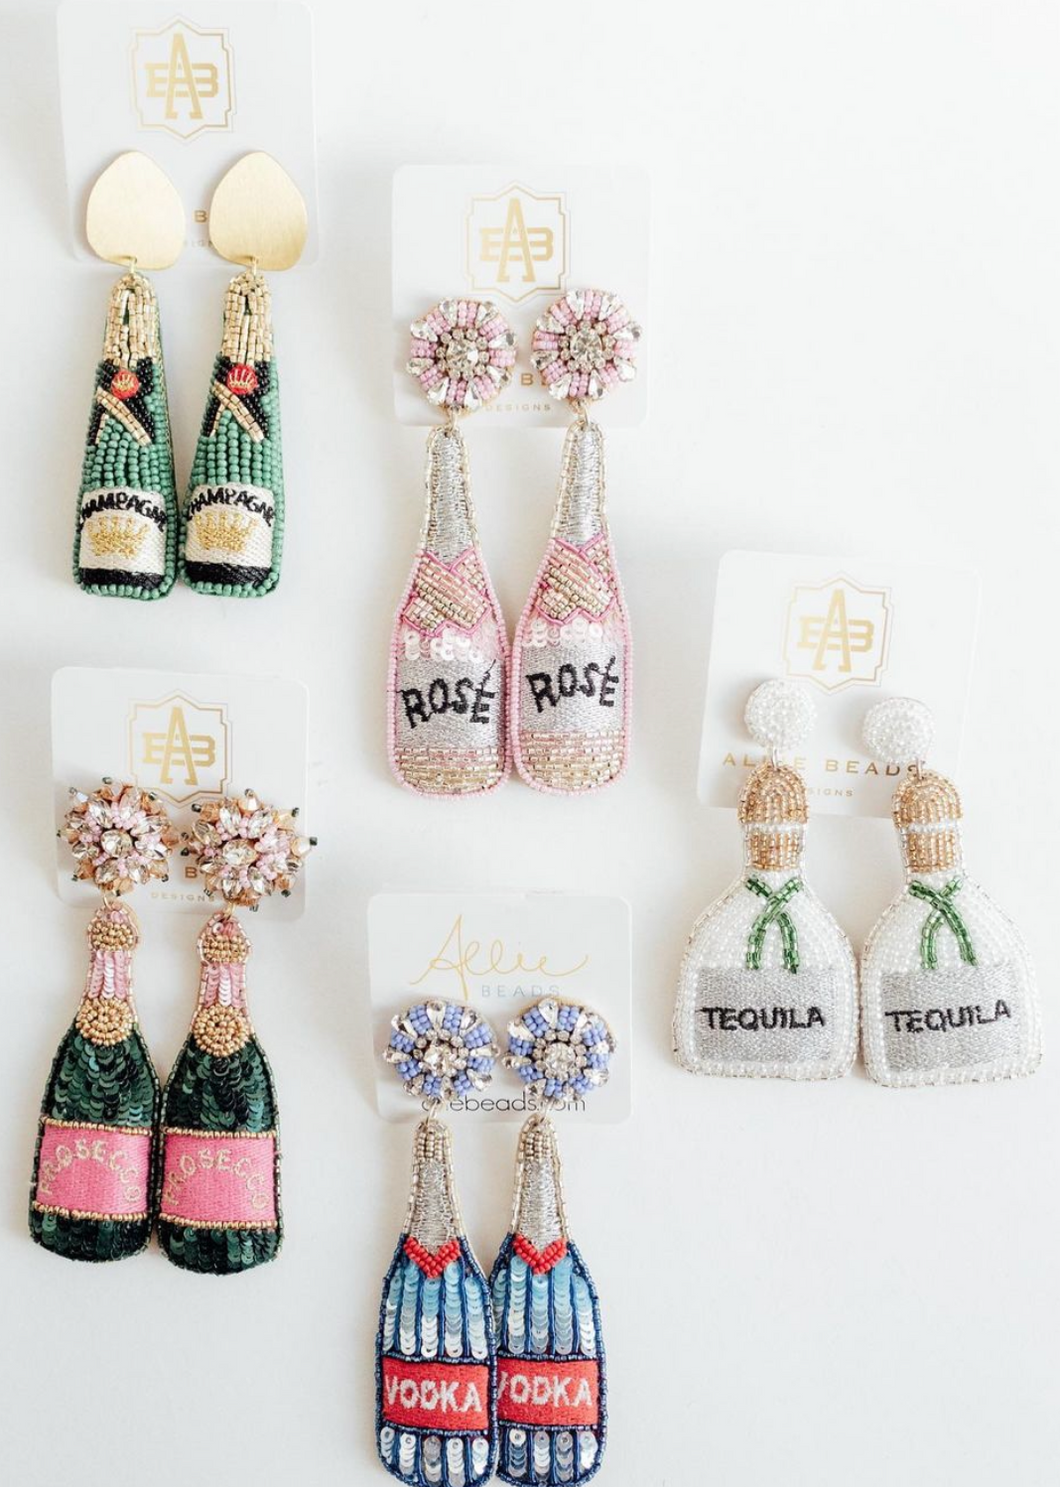 Allie Beads Green Champagne Earrings